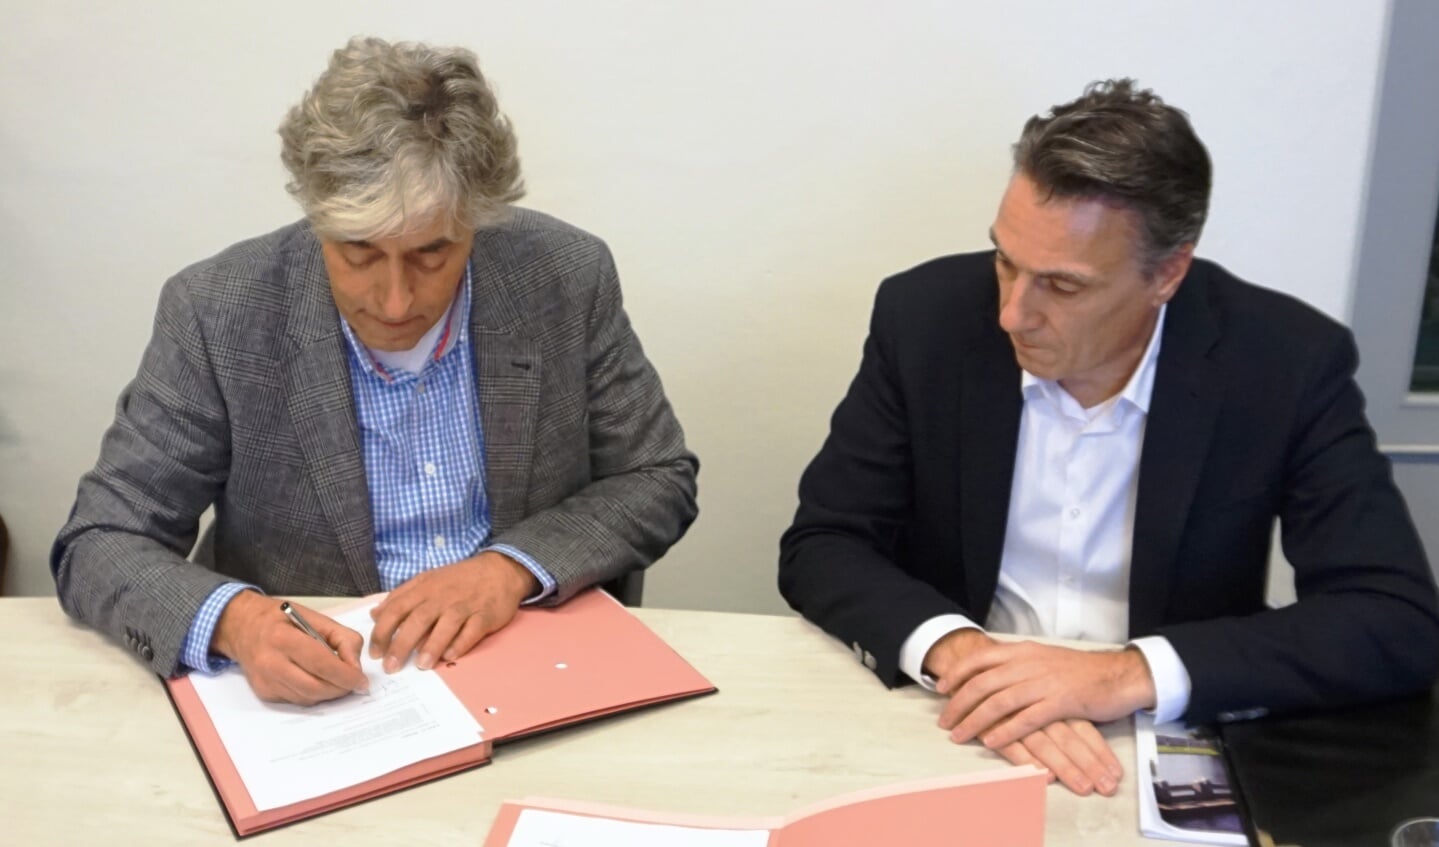 Ondertekening SOK Van Stiphout, Robert Visser en Marcel Merkx 